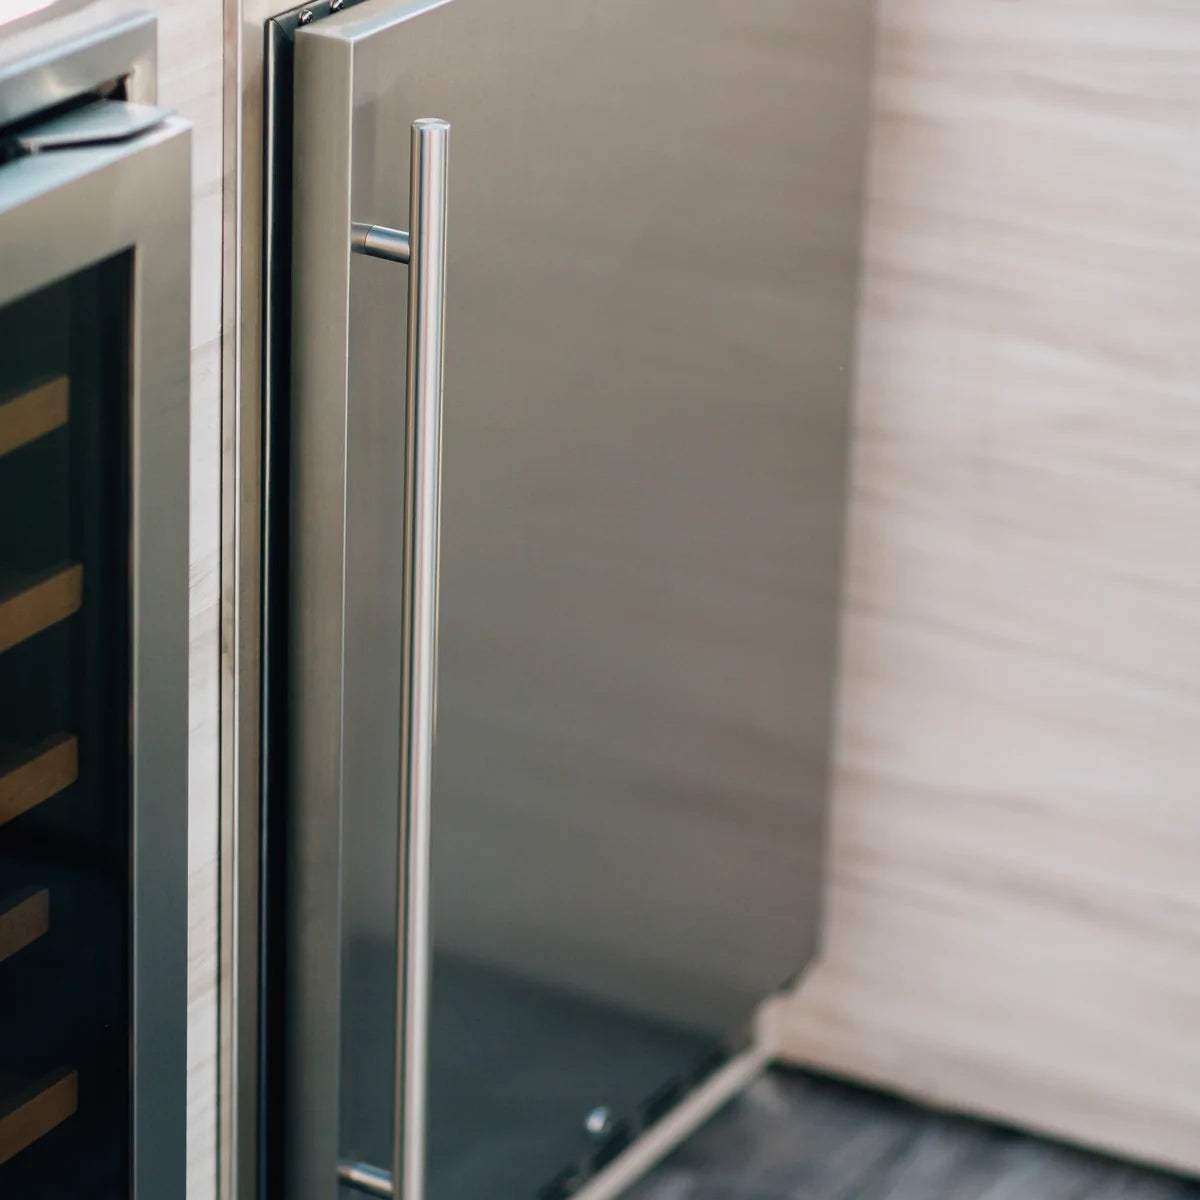 Summerset 24" 5.3c Outdoor Rated Built-in Refrigerator - Upper Livin